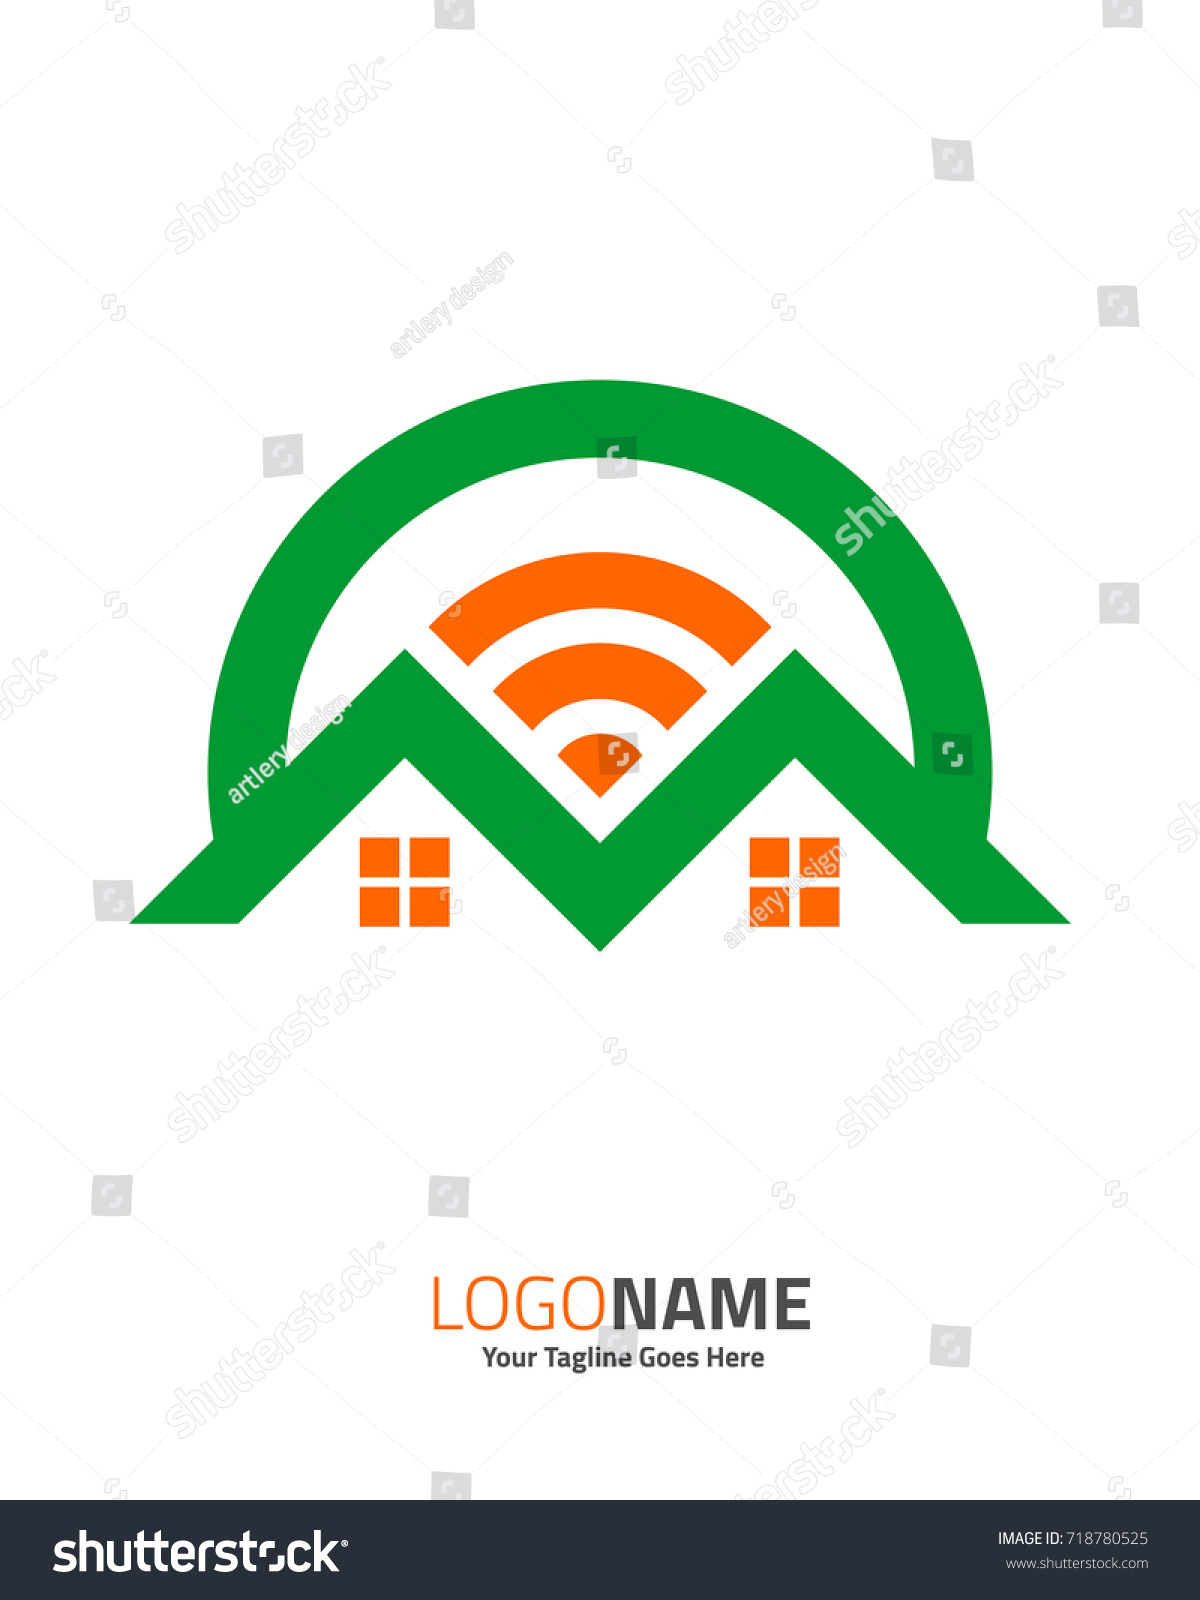 Hotspot Wifi Home Wifi Logo Stock Vector HD Royalty Free